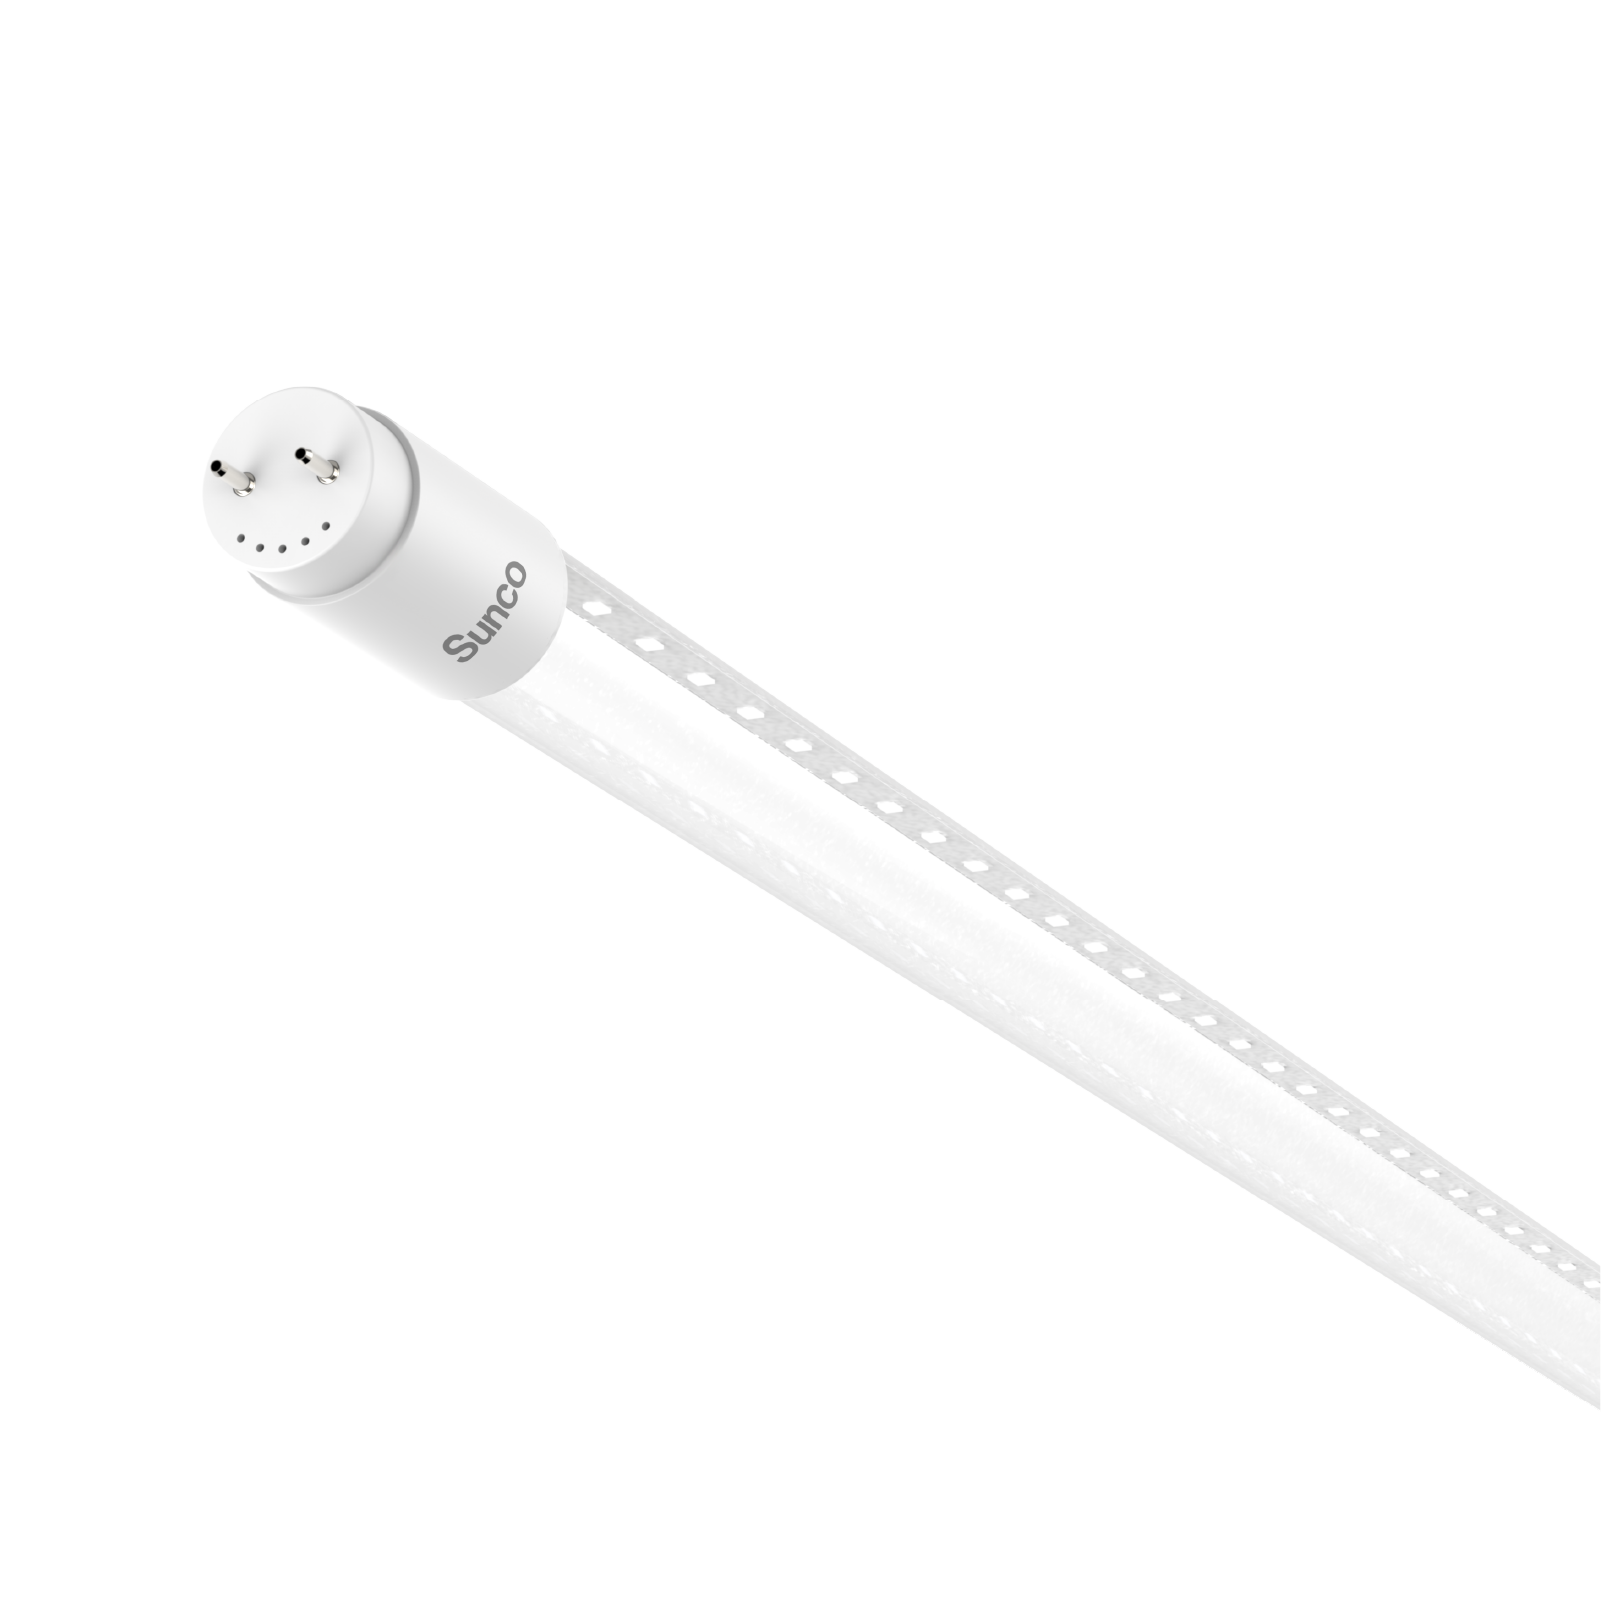 LAMPE TUBE LED T8 AC 85-265 V, 1.2 m 18 W, 1800 lm, 6000-6500 K. 1050203627